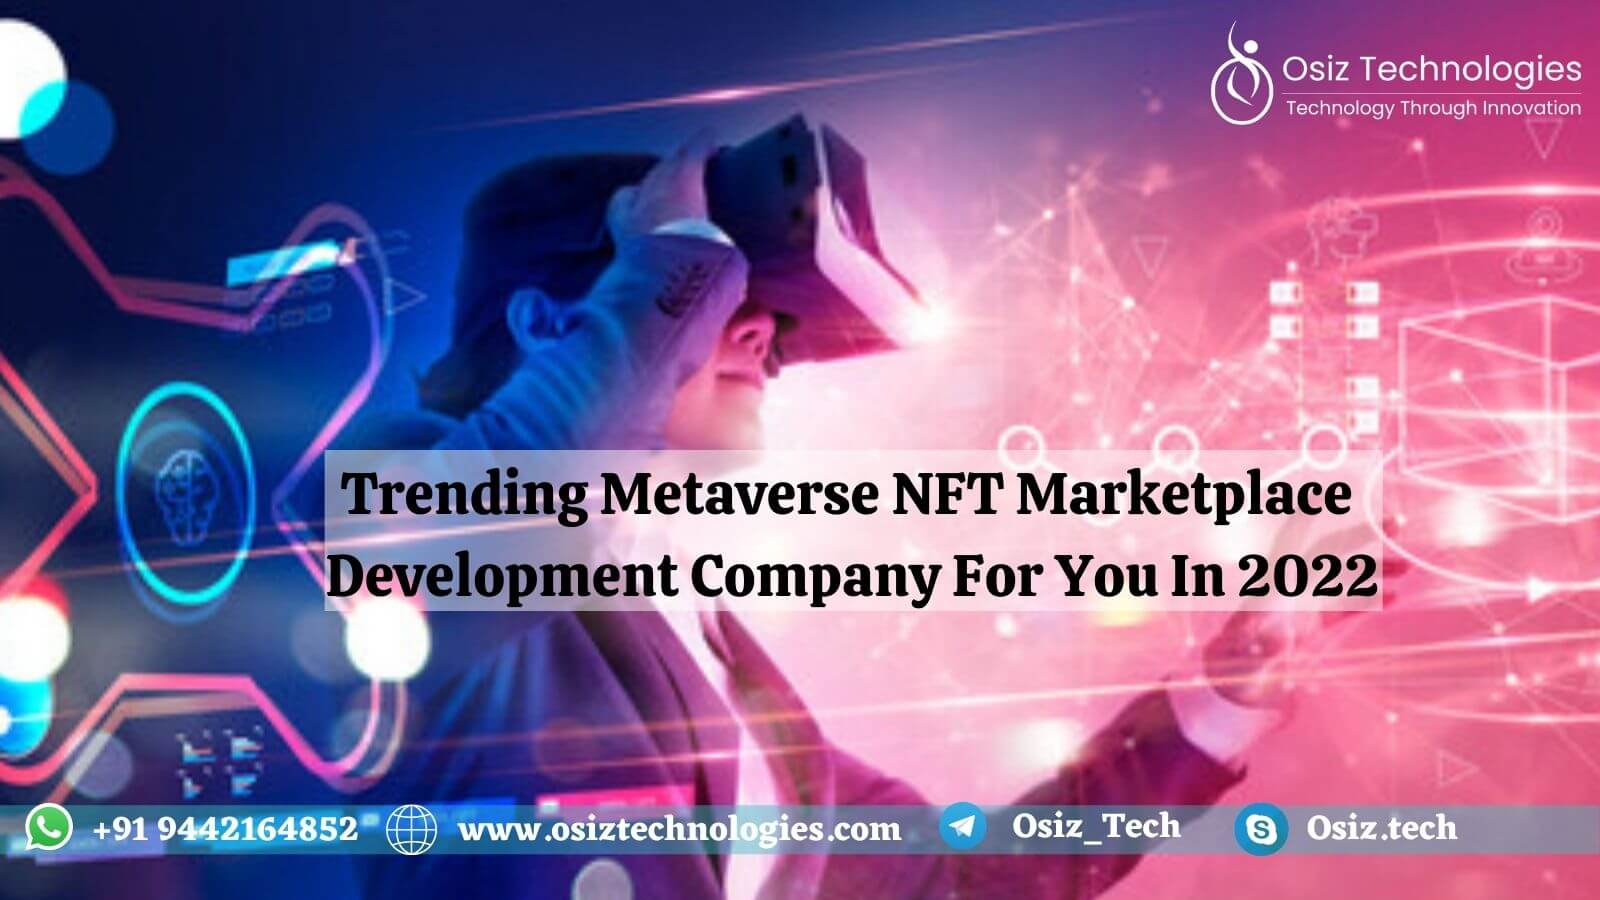 Metaverse NFT Marketplace Development Company 